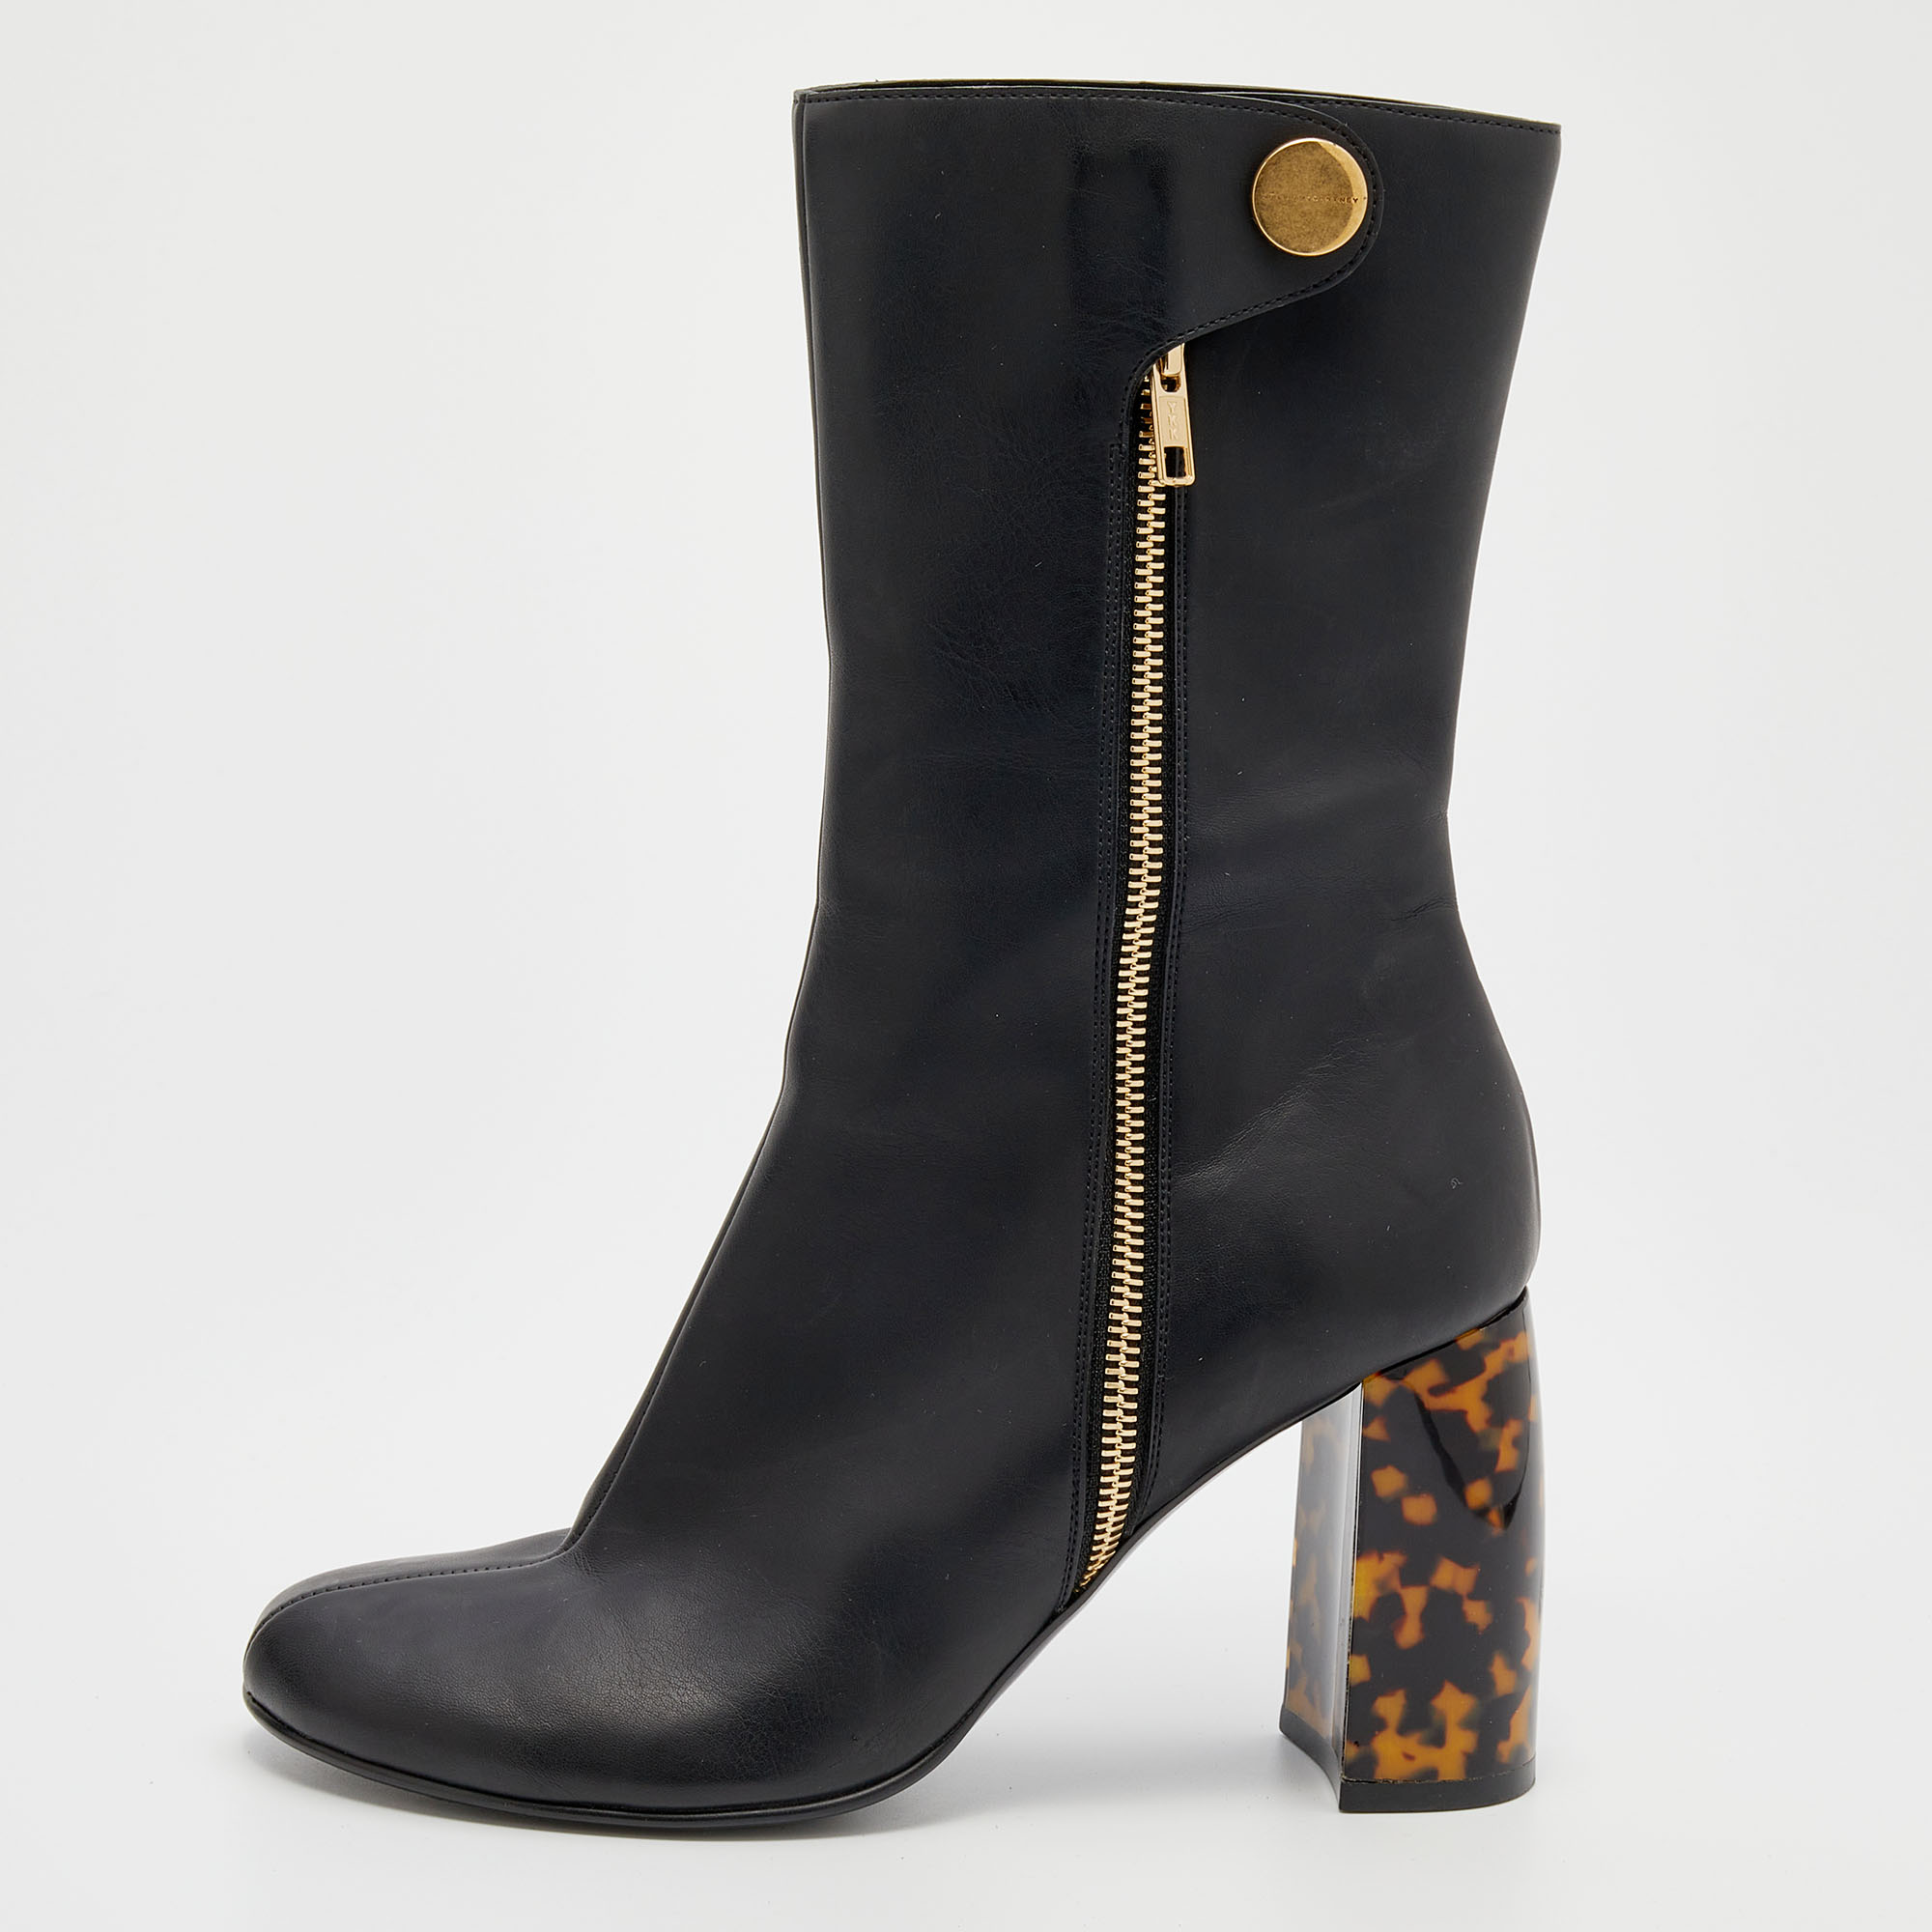 Stella mccartney black faux leather tortoise block heel "percy" ankle boots size 37